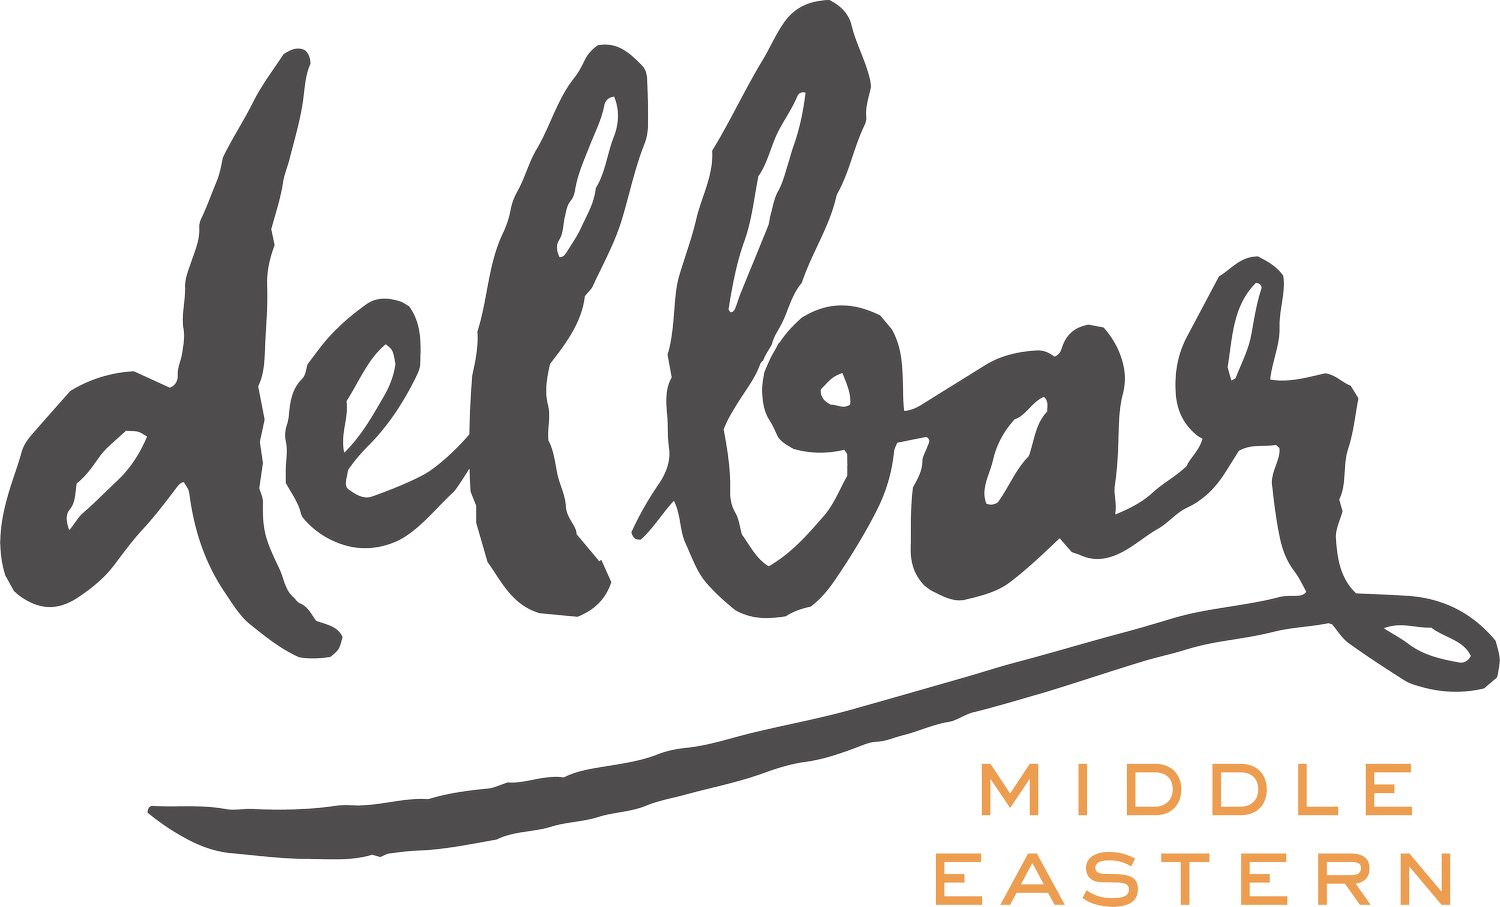 Delbar Middle Eastern Restaurant and Bar